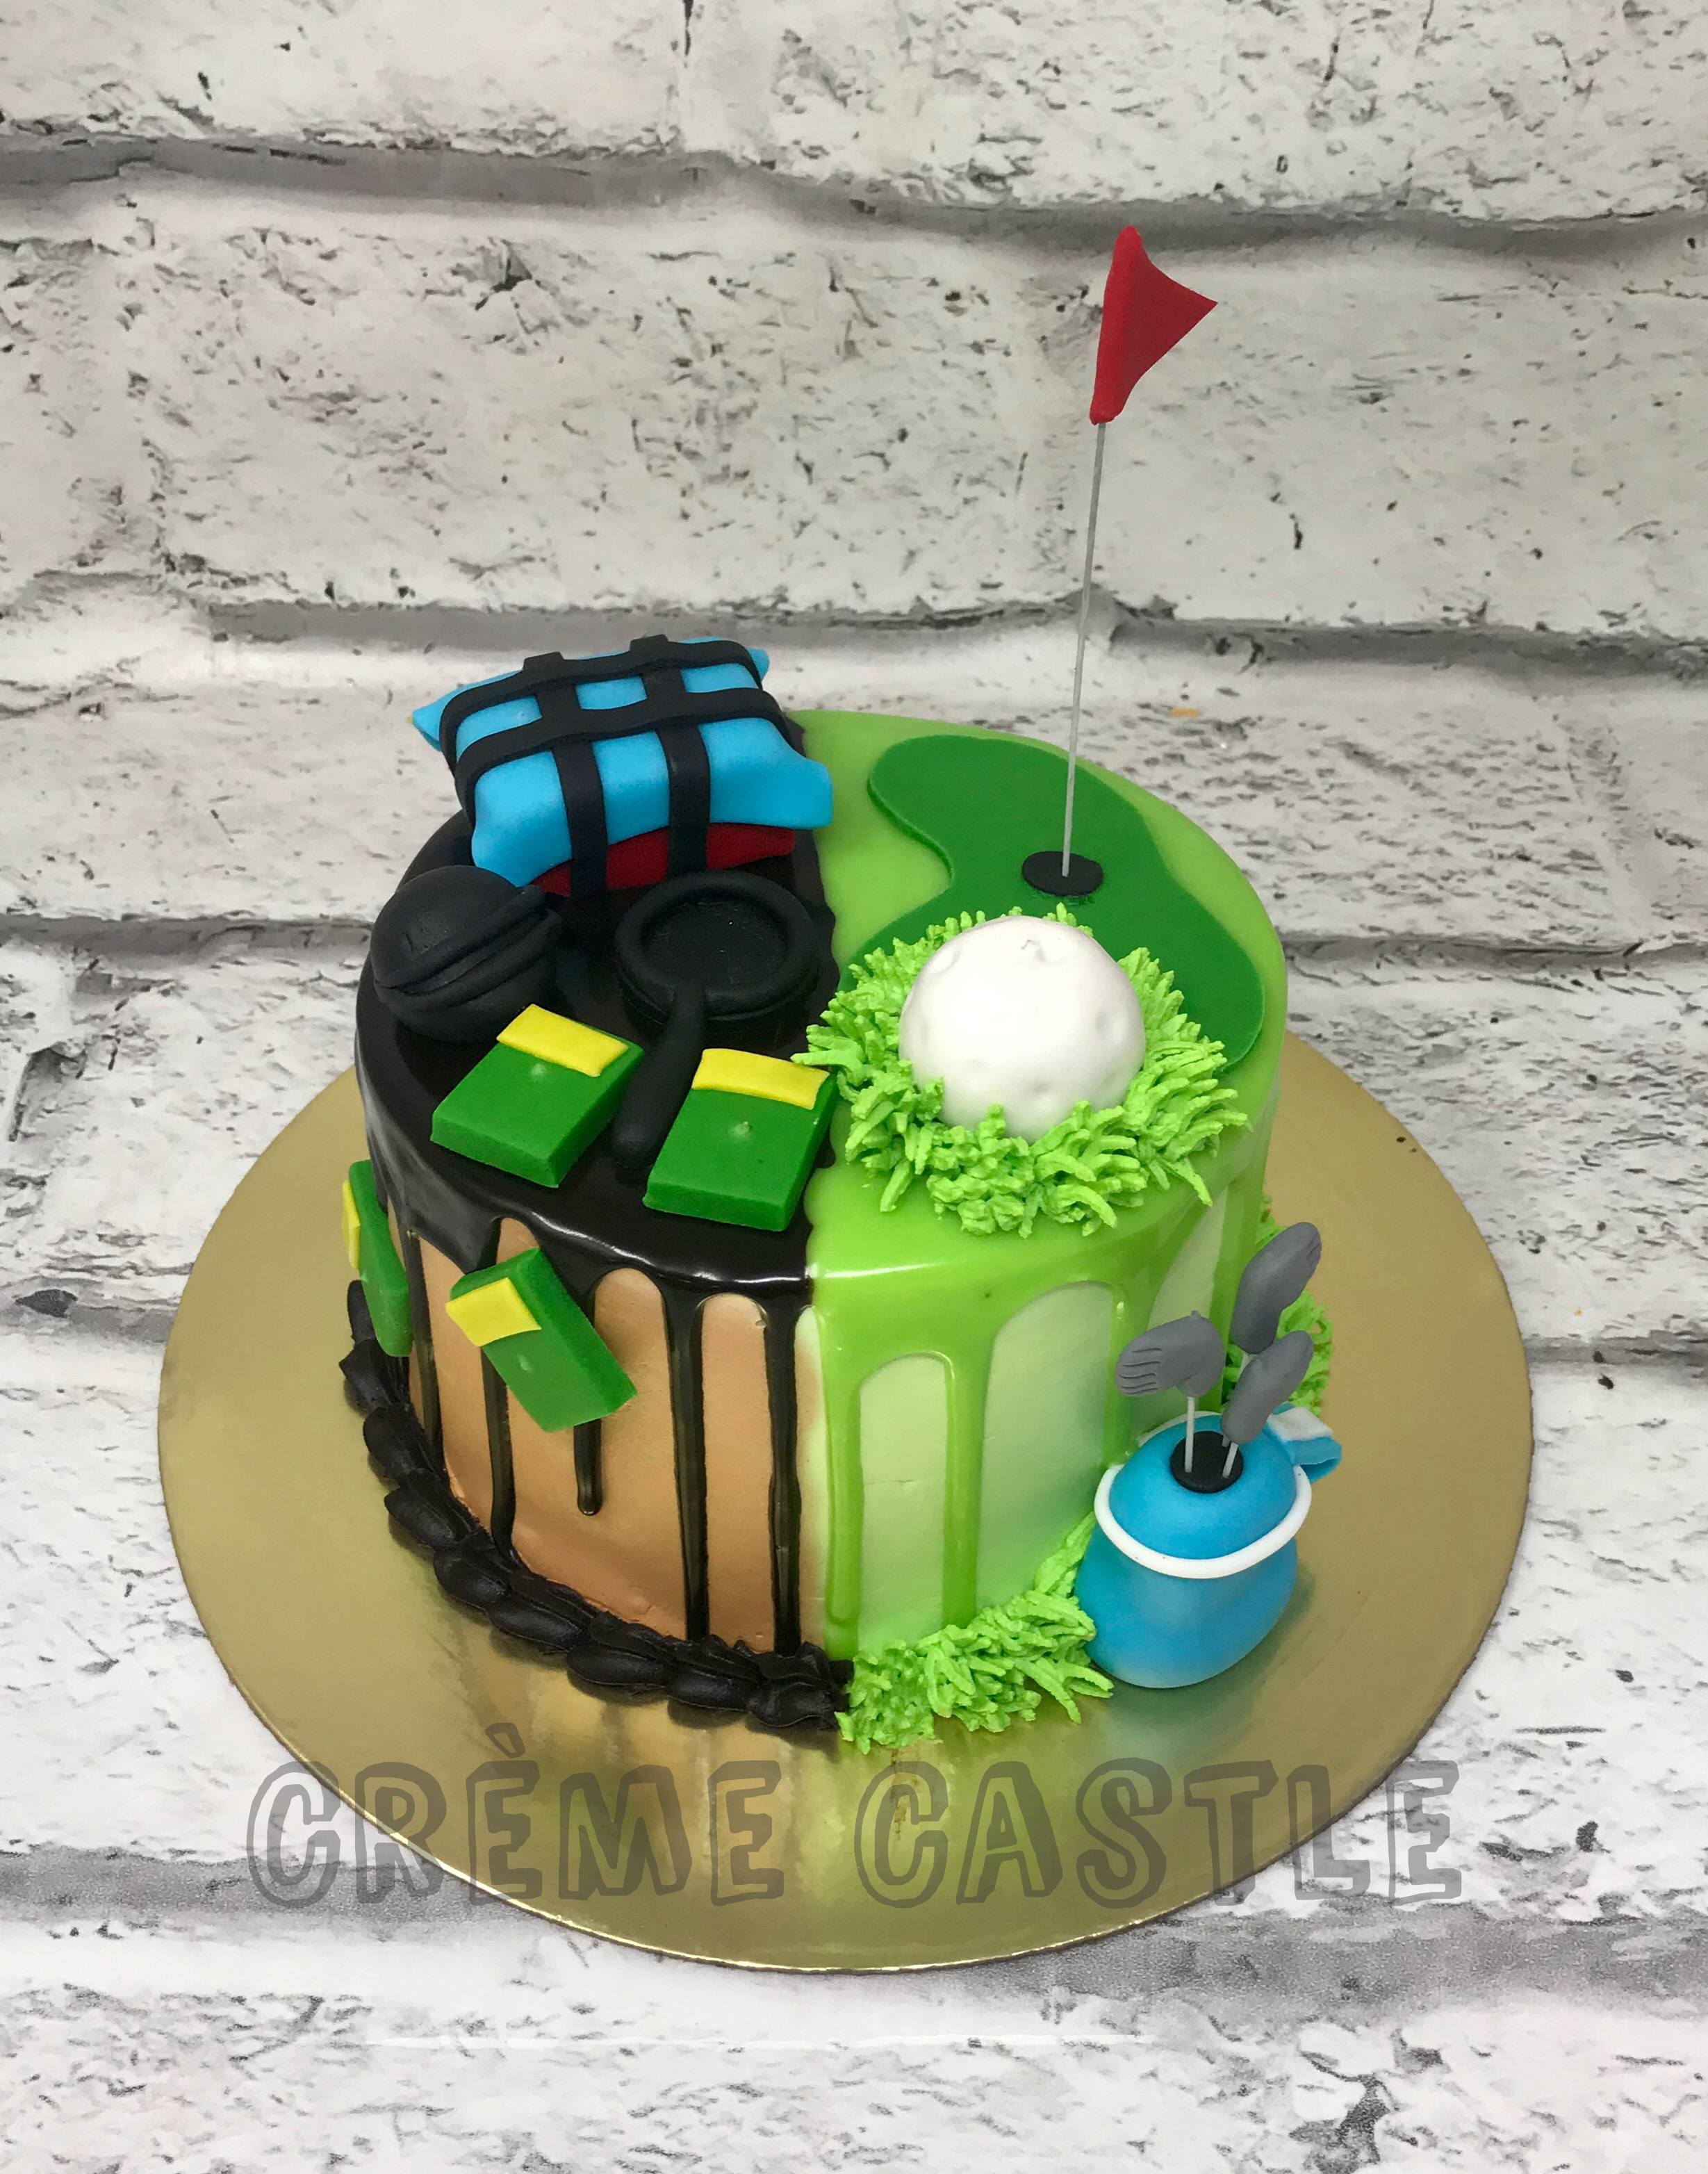 Pubg Cake Online - Customize Cake Online Delivery - Order Custom Cake